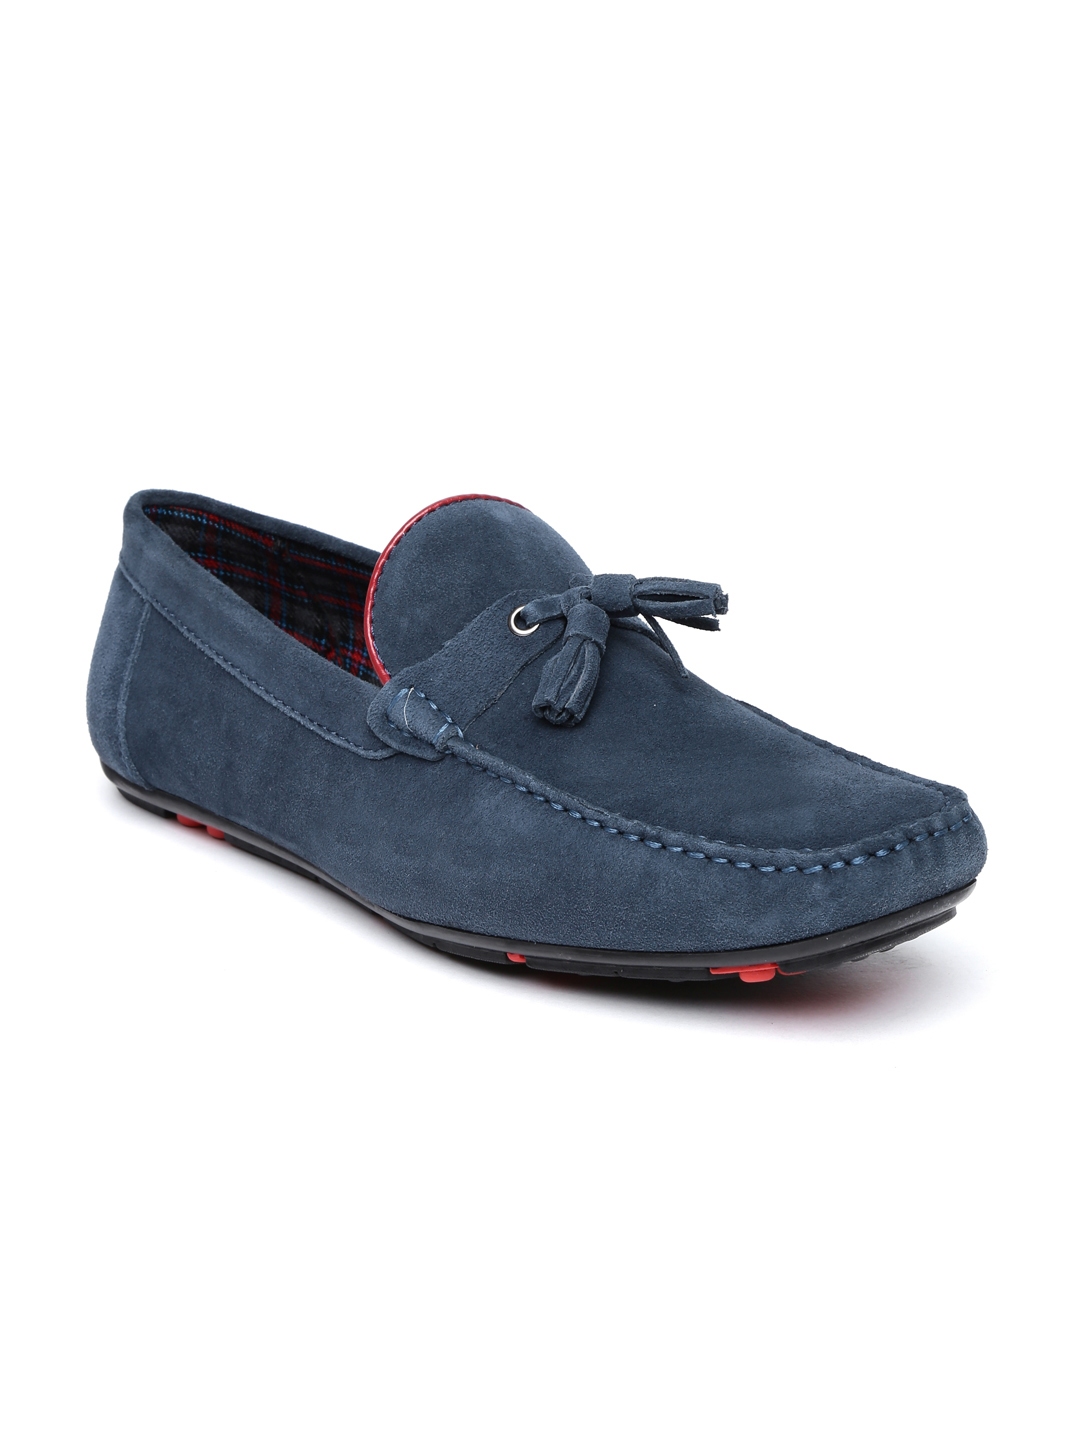 Buy Bata Men Navy Suede Tassel Loafers 